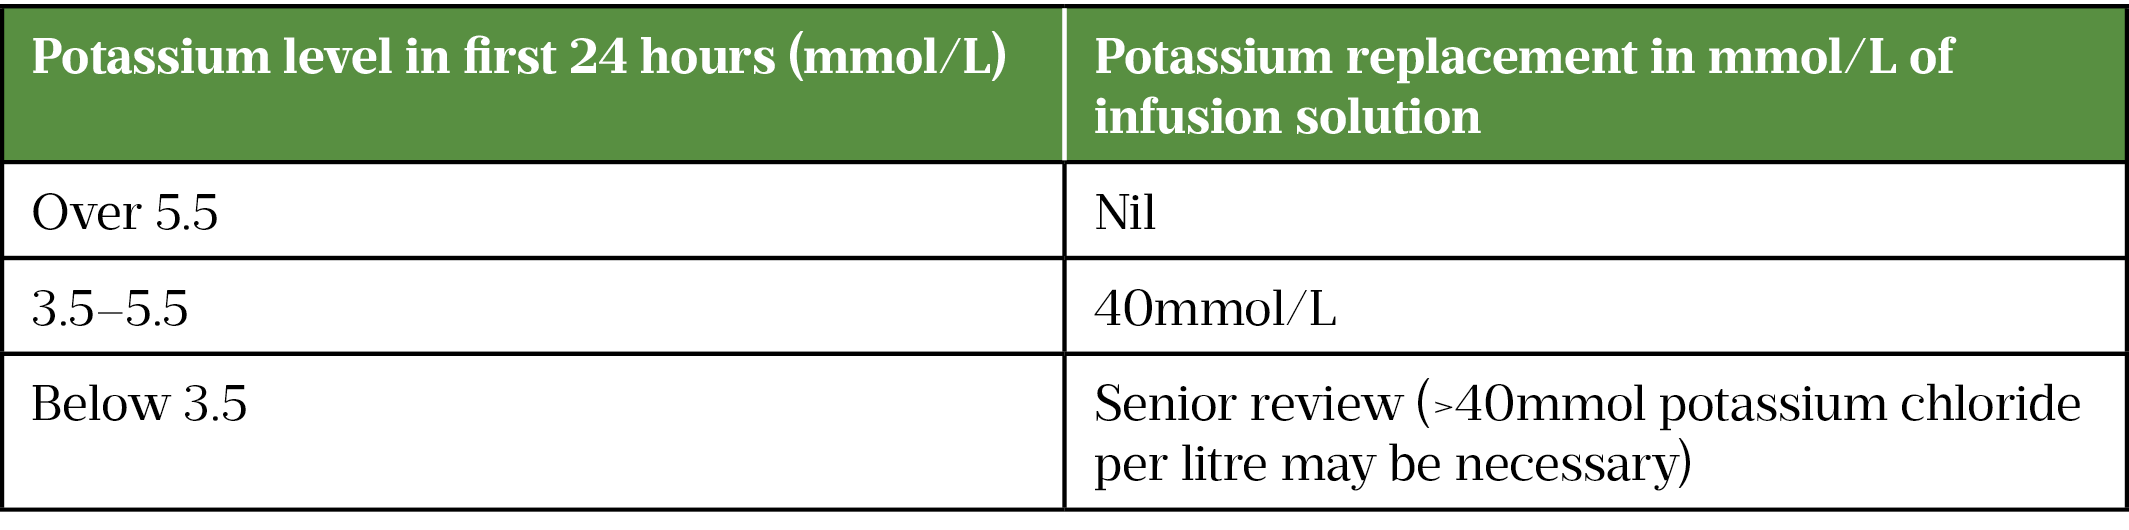 Table 2- Potassium replacement